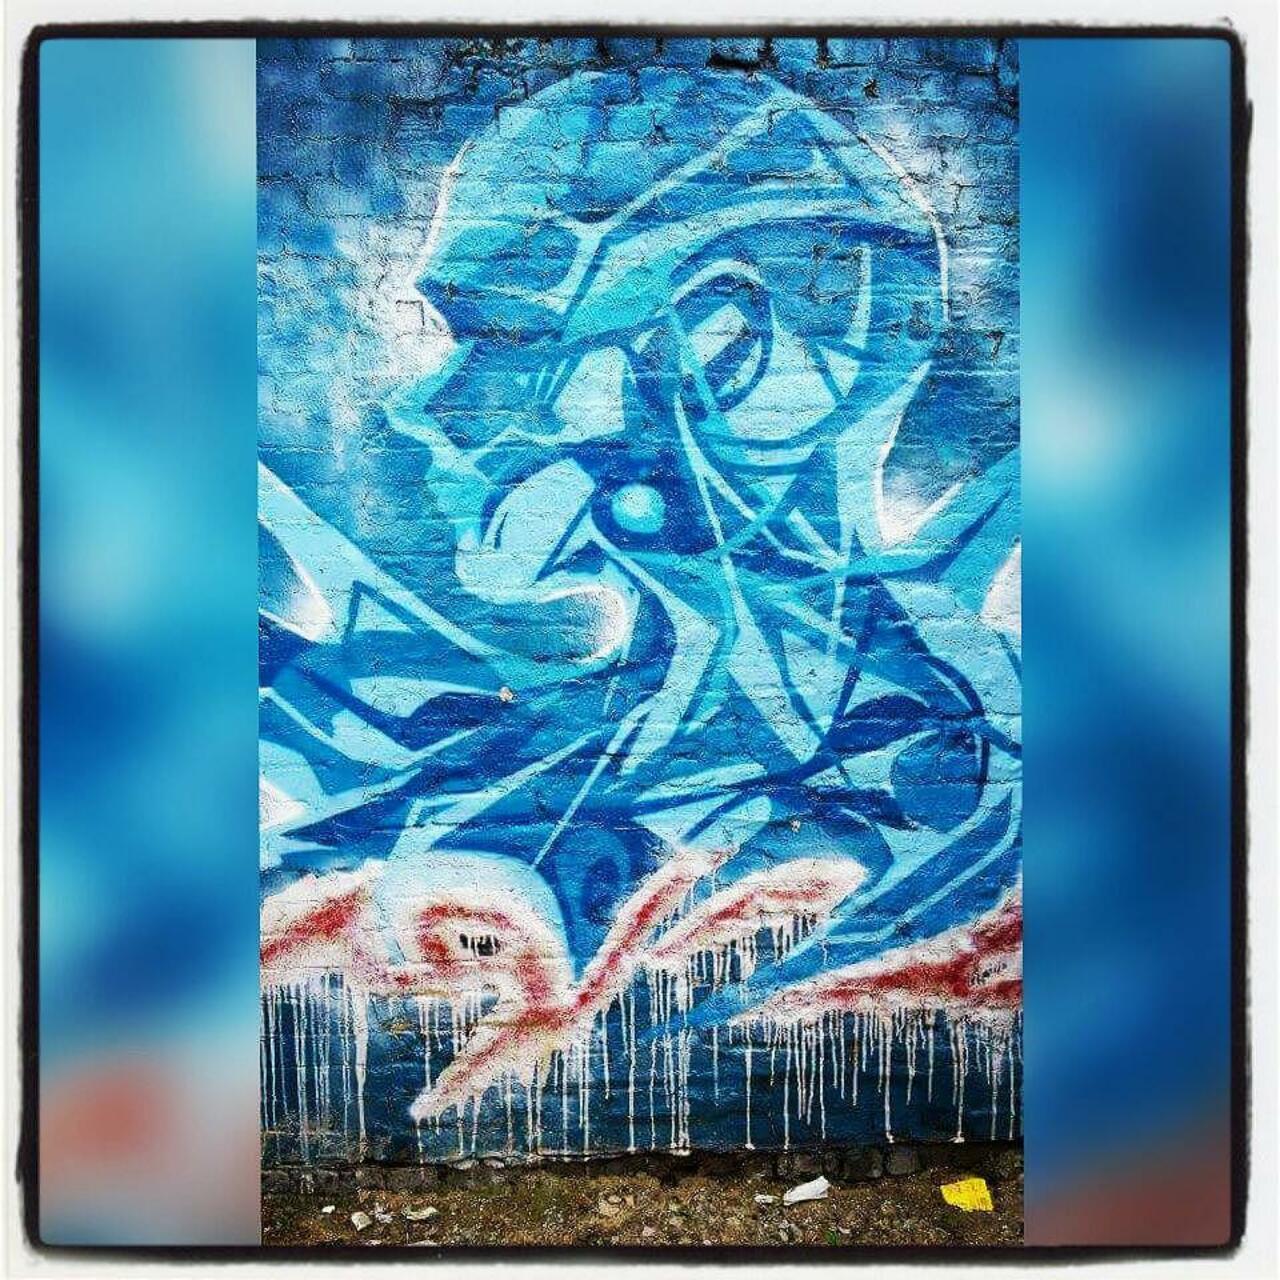 #streetart #london #blue #face #wall #bricks #england #londonstreetart #street #art #streetartlondon #graffiti #ste… http://t.co/KF2ih8vnYk